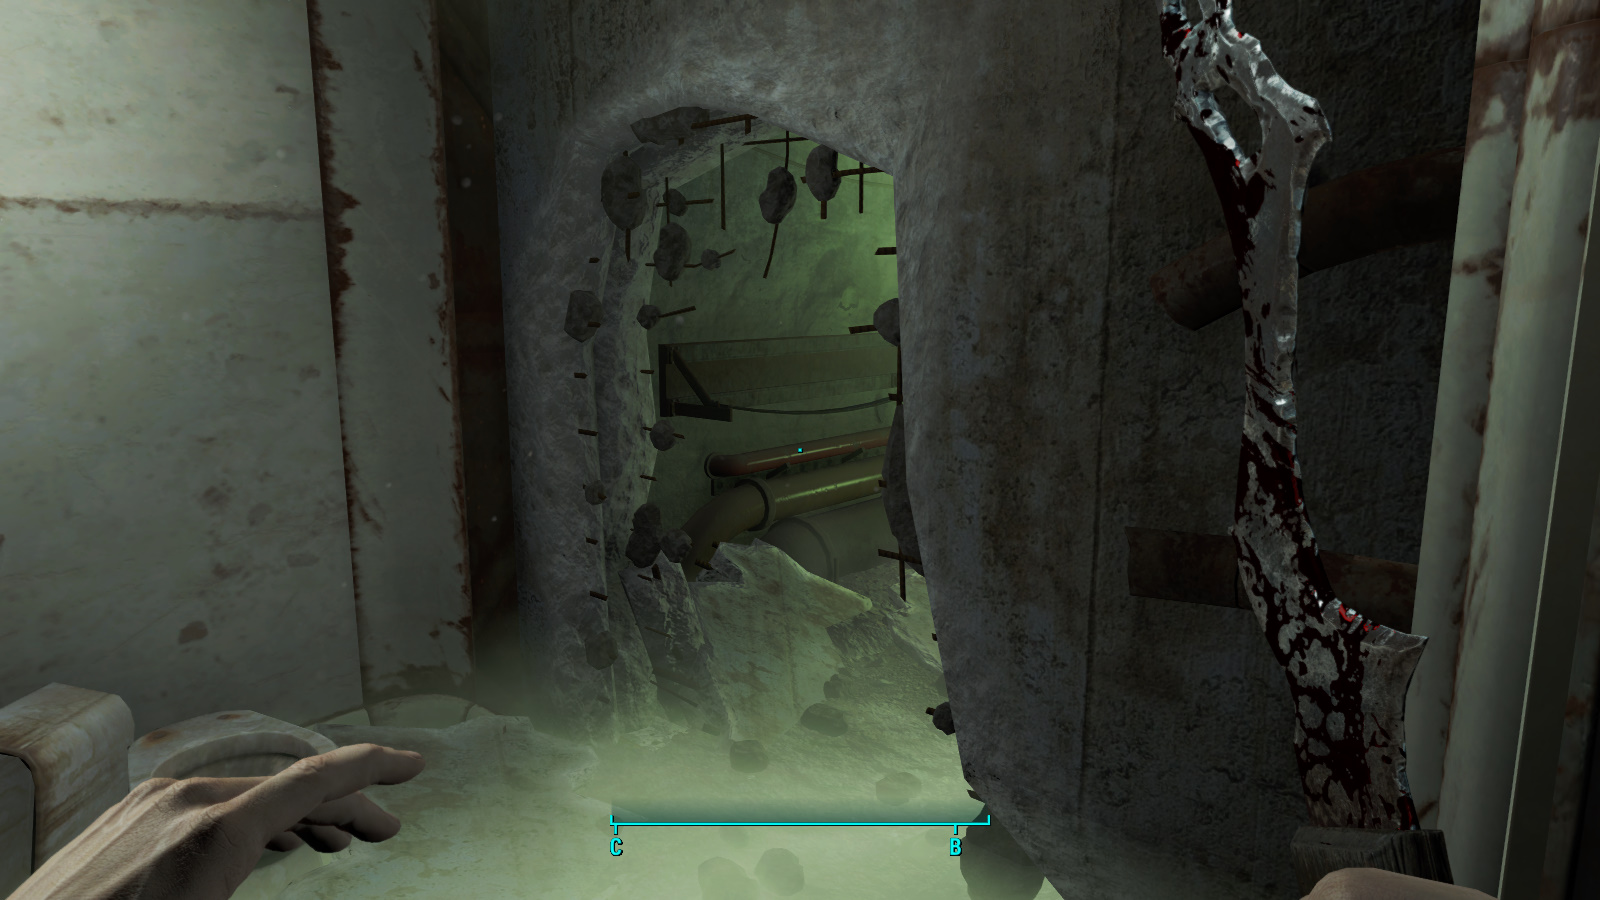 проникнуть в институт fallout 4 через канализацию как фото 76